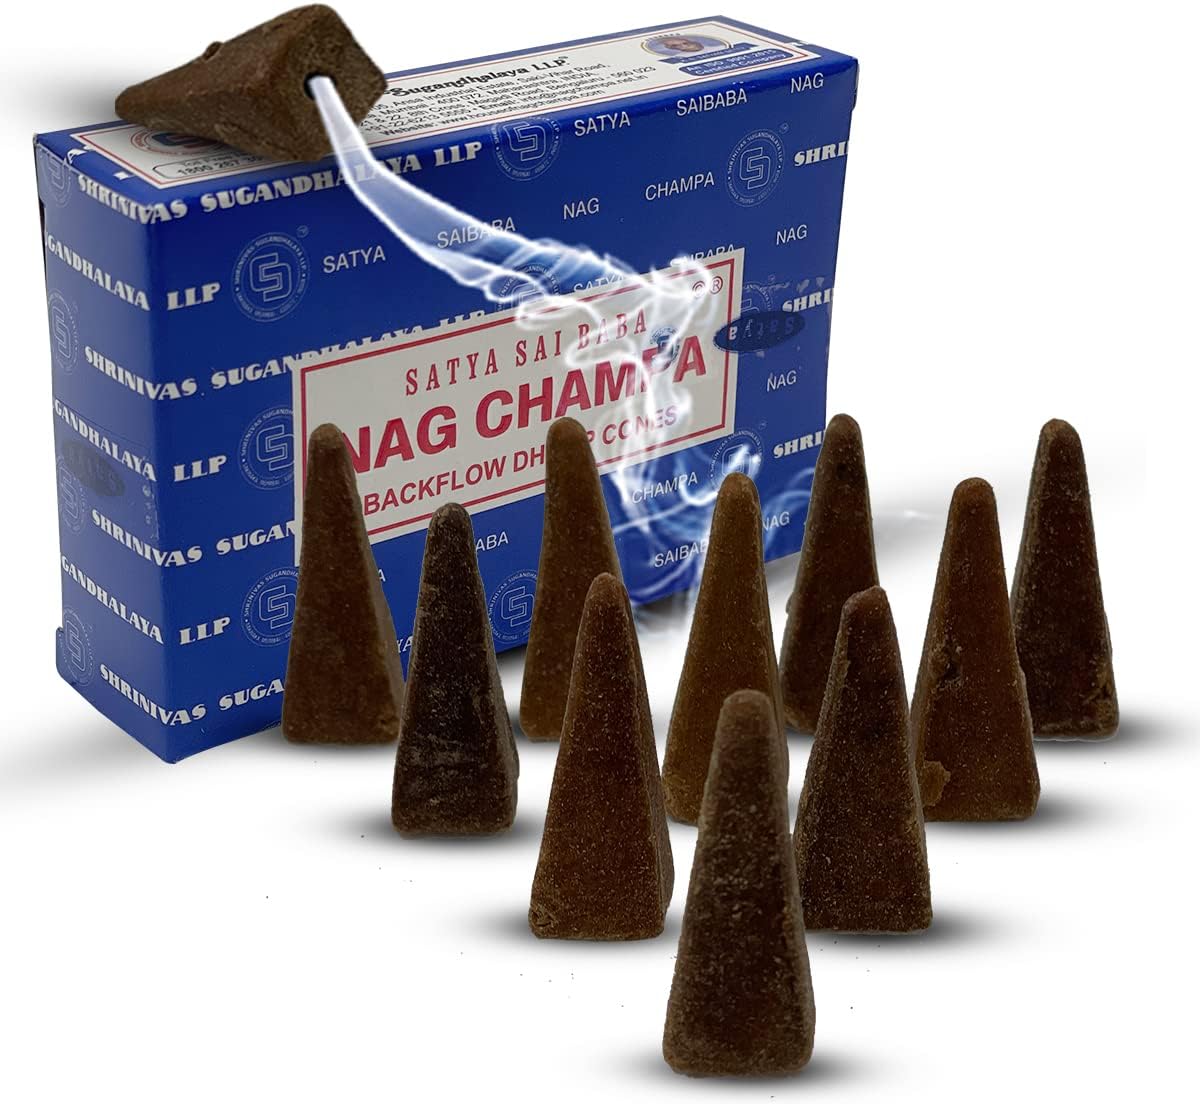 Satya Sai Baba Nag Champa Backflow Incense Cones - 6 Packs of 10 cones - Total Approx 60 cones